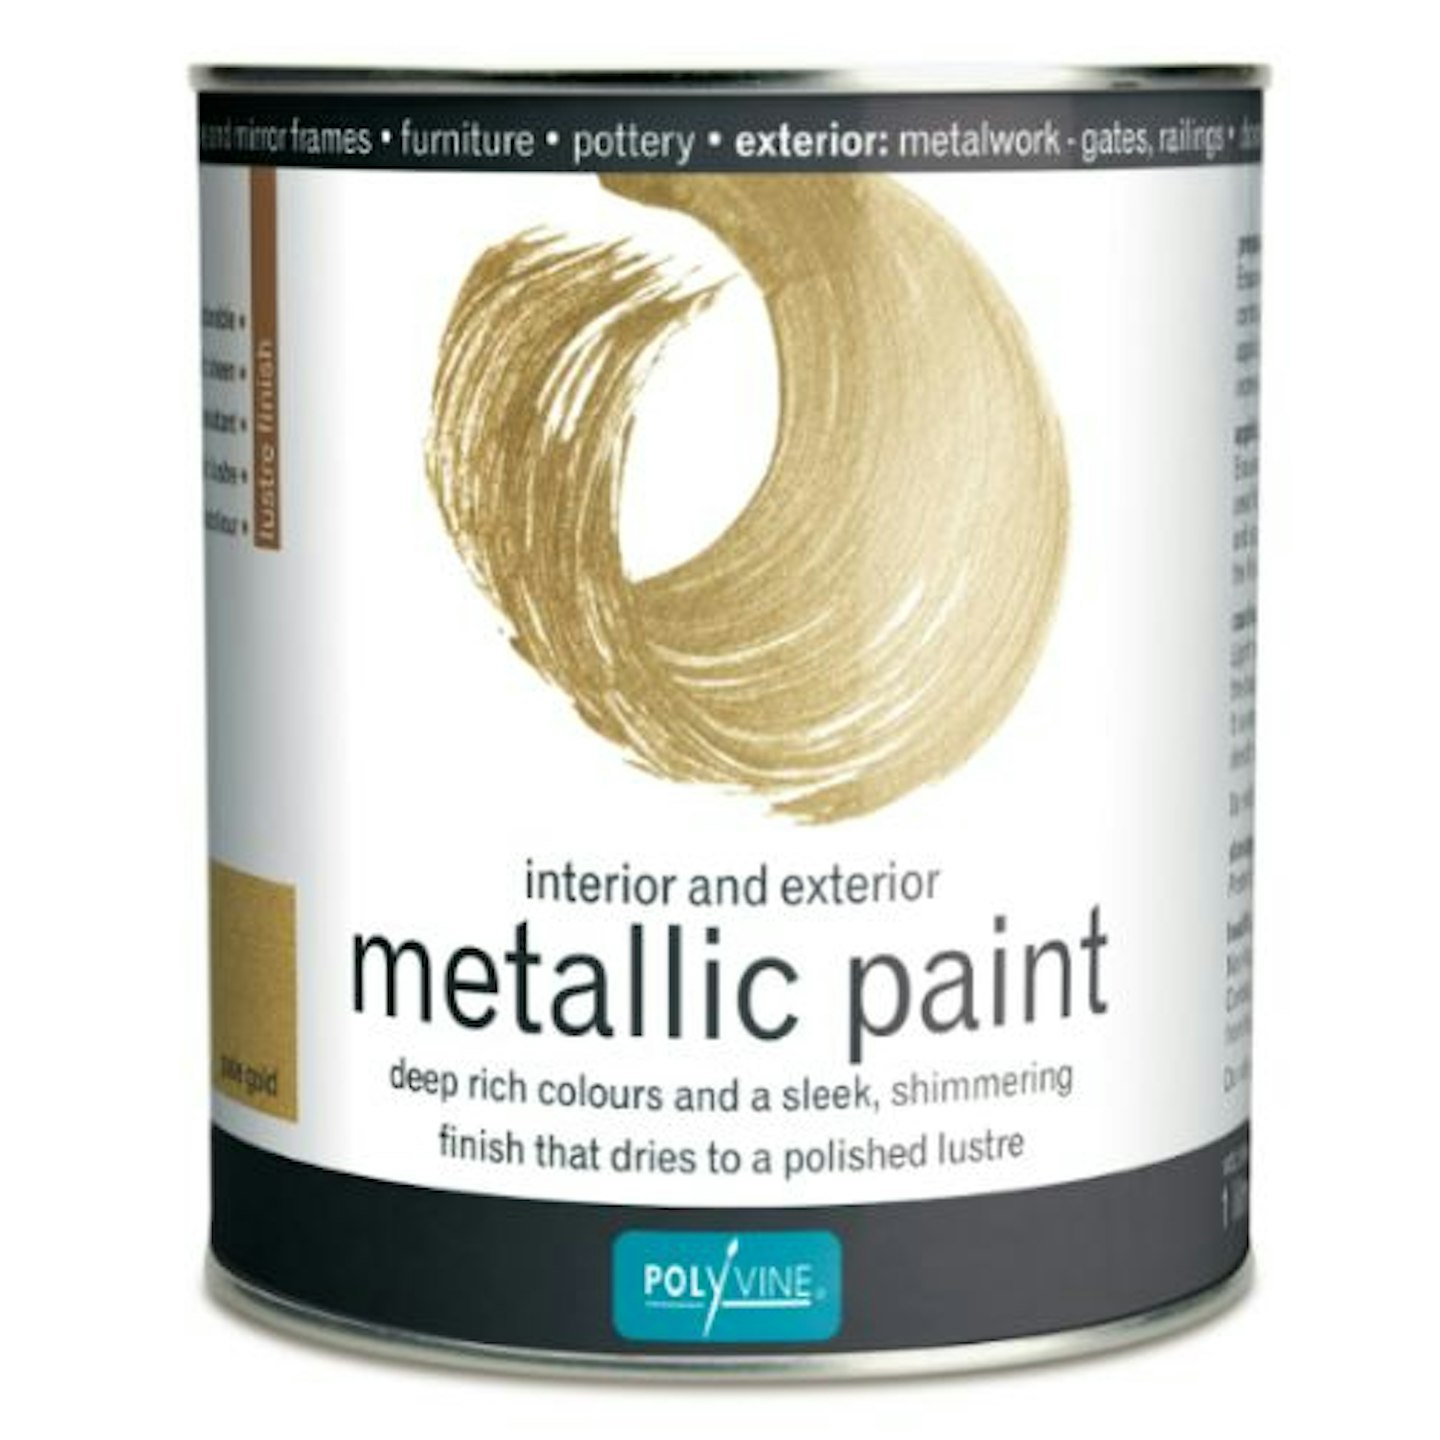 Polyvine Metallic Paint